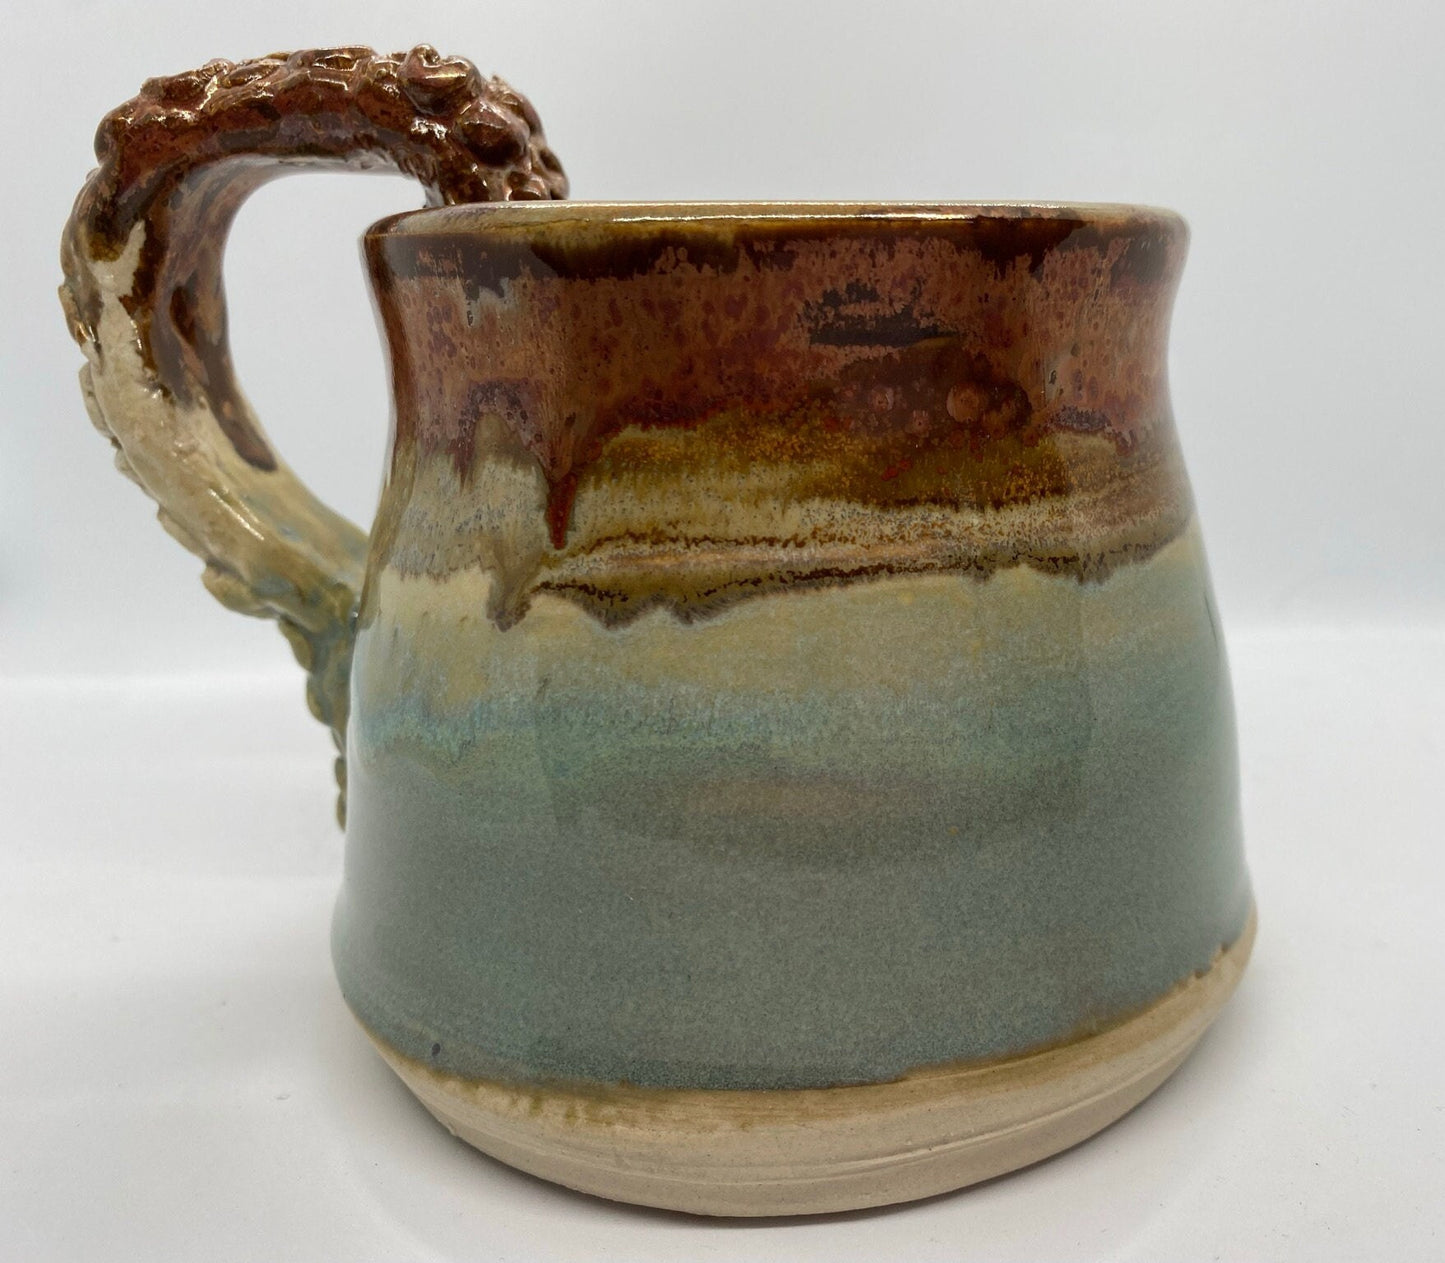 Octopus Mug - Handmade Ceramic Stoneware, Ceramic Mug, Hand Made Mug, Coffee Mug, Stoneware Coffee Mug, Ceramic Coffee Cup